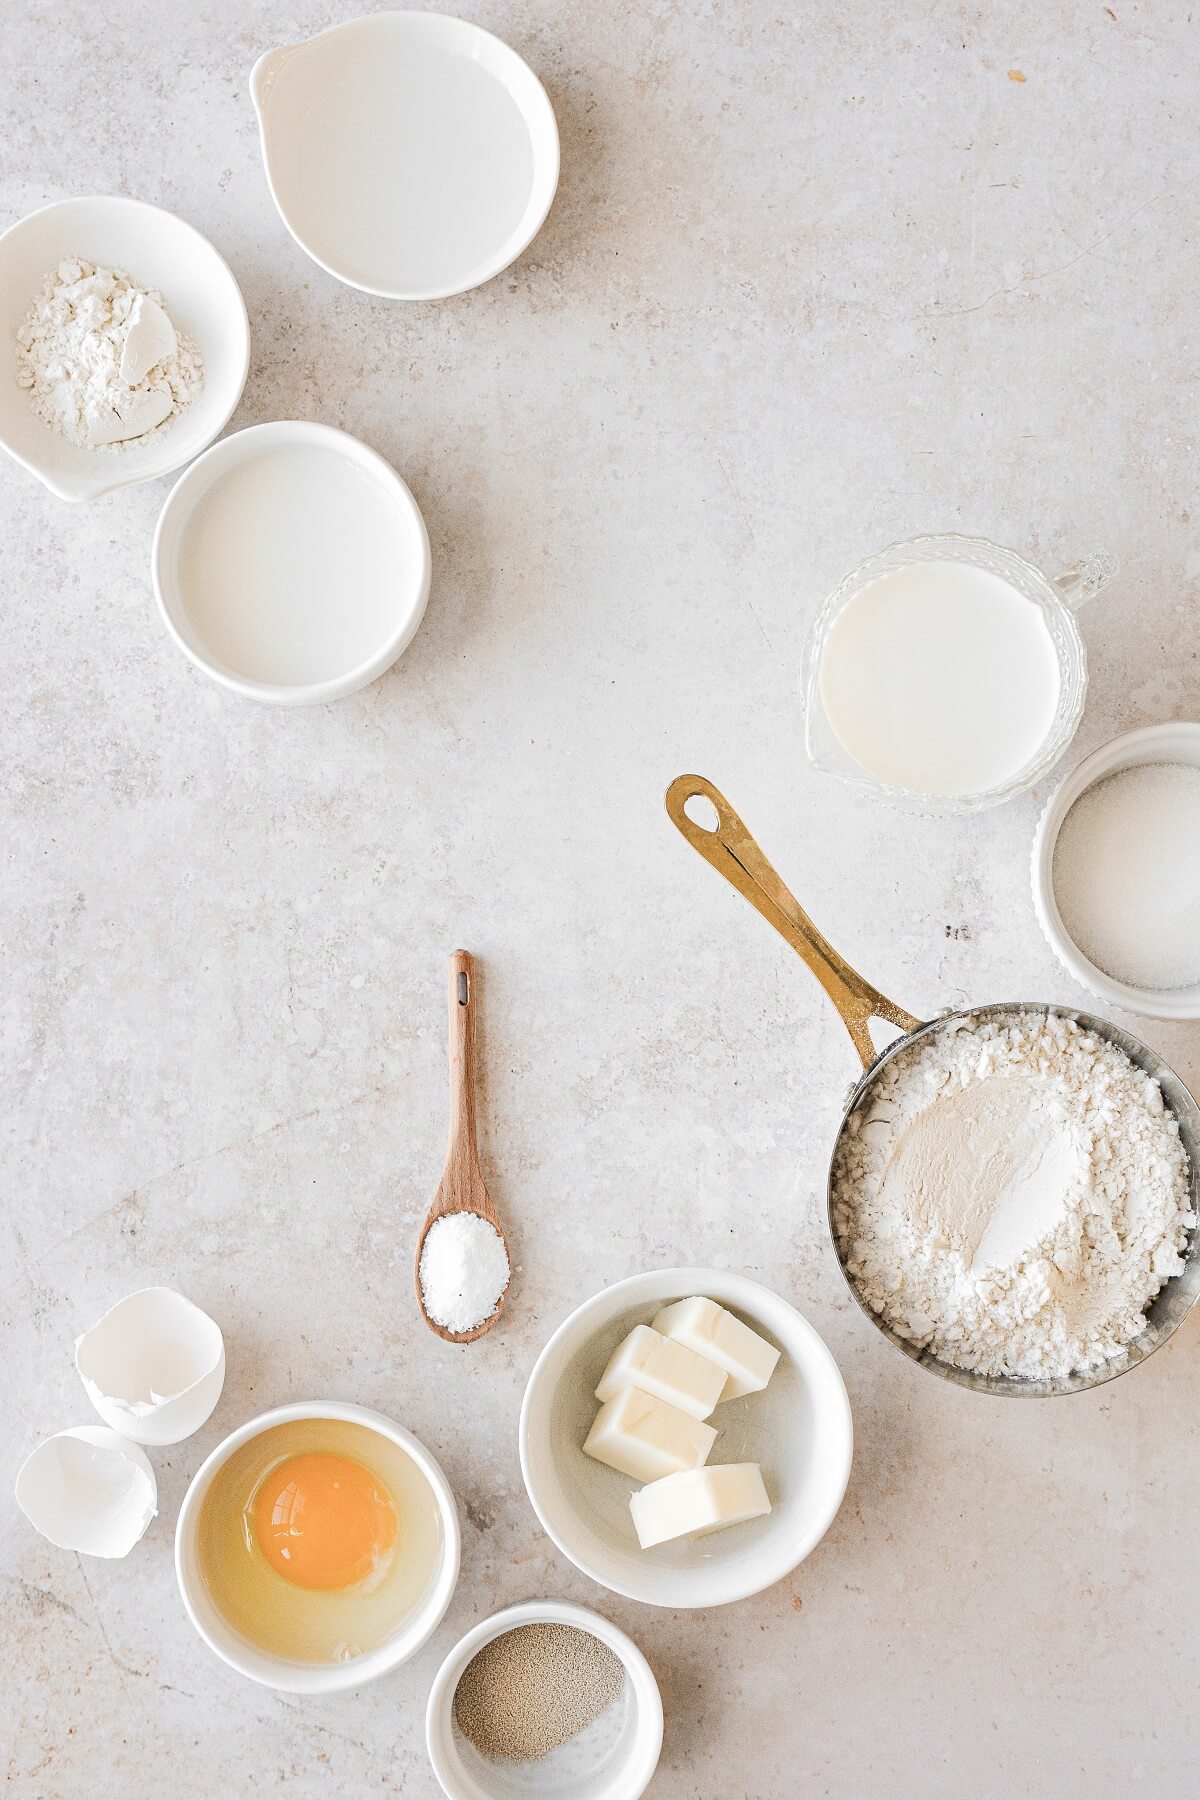 Ingredients for making homemade milk buns.